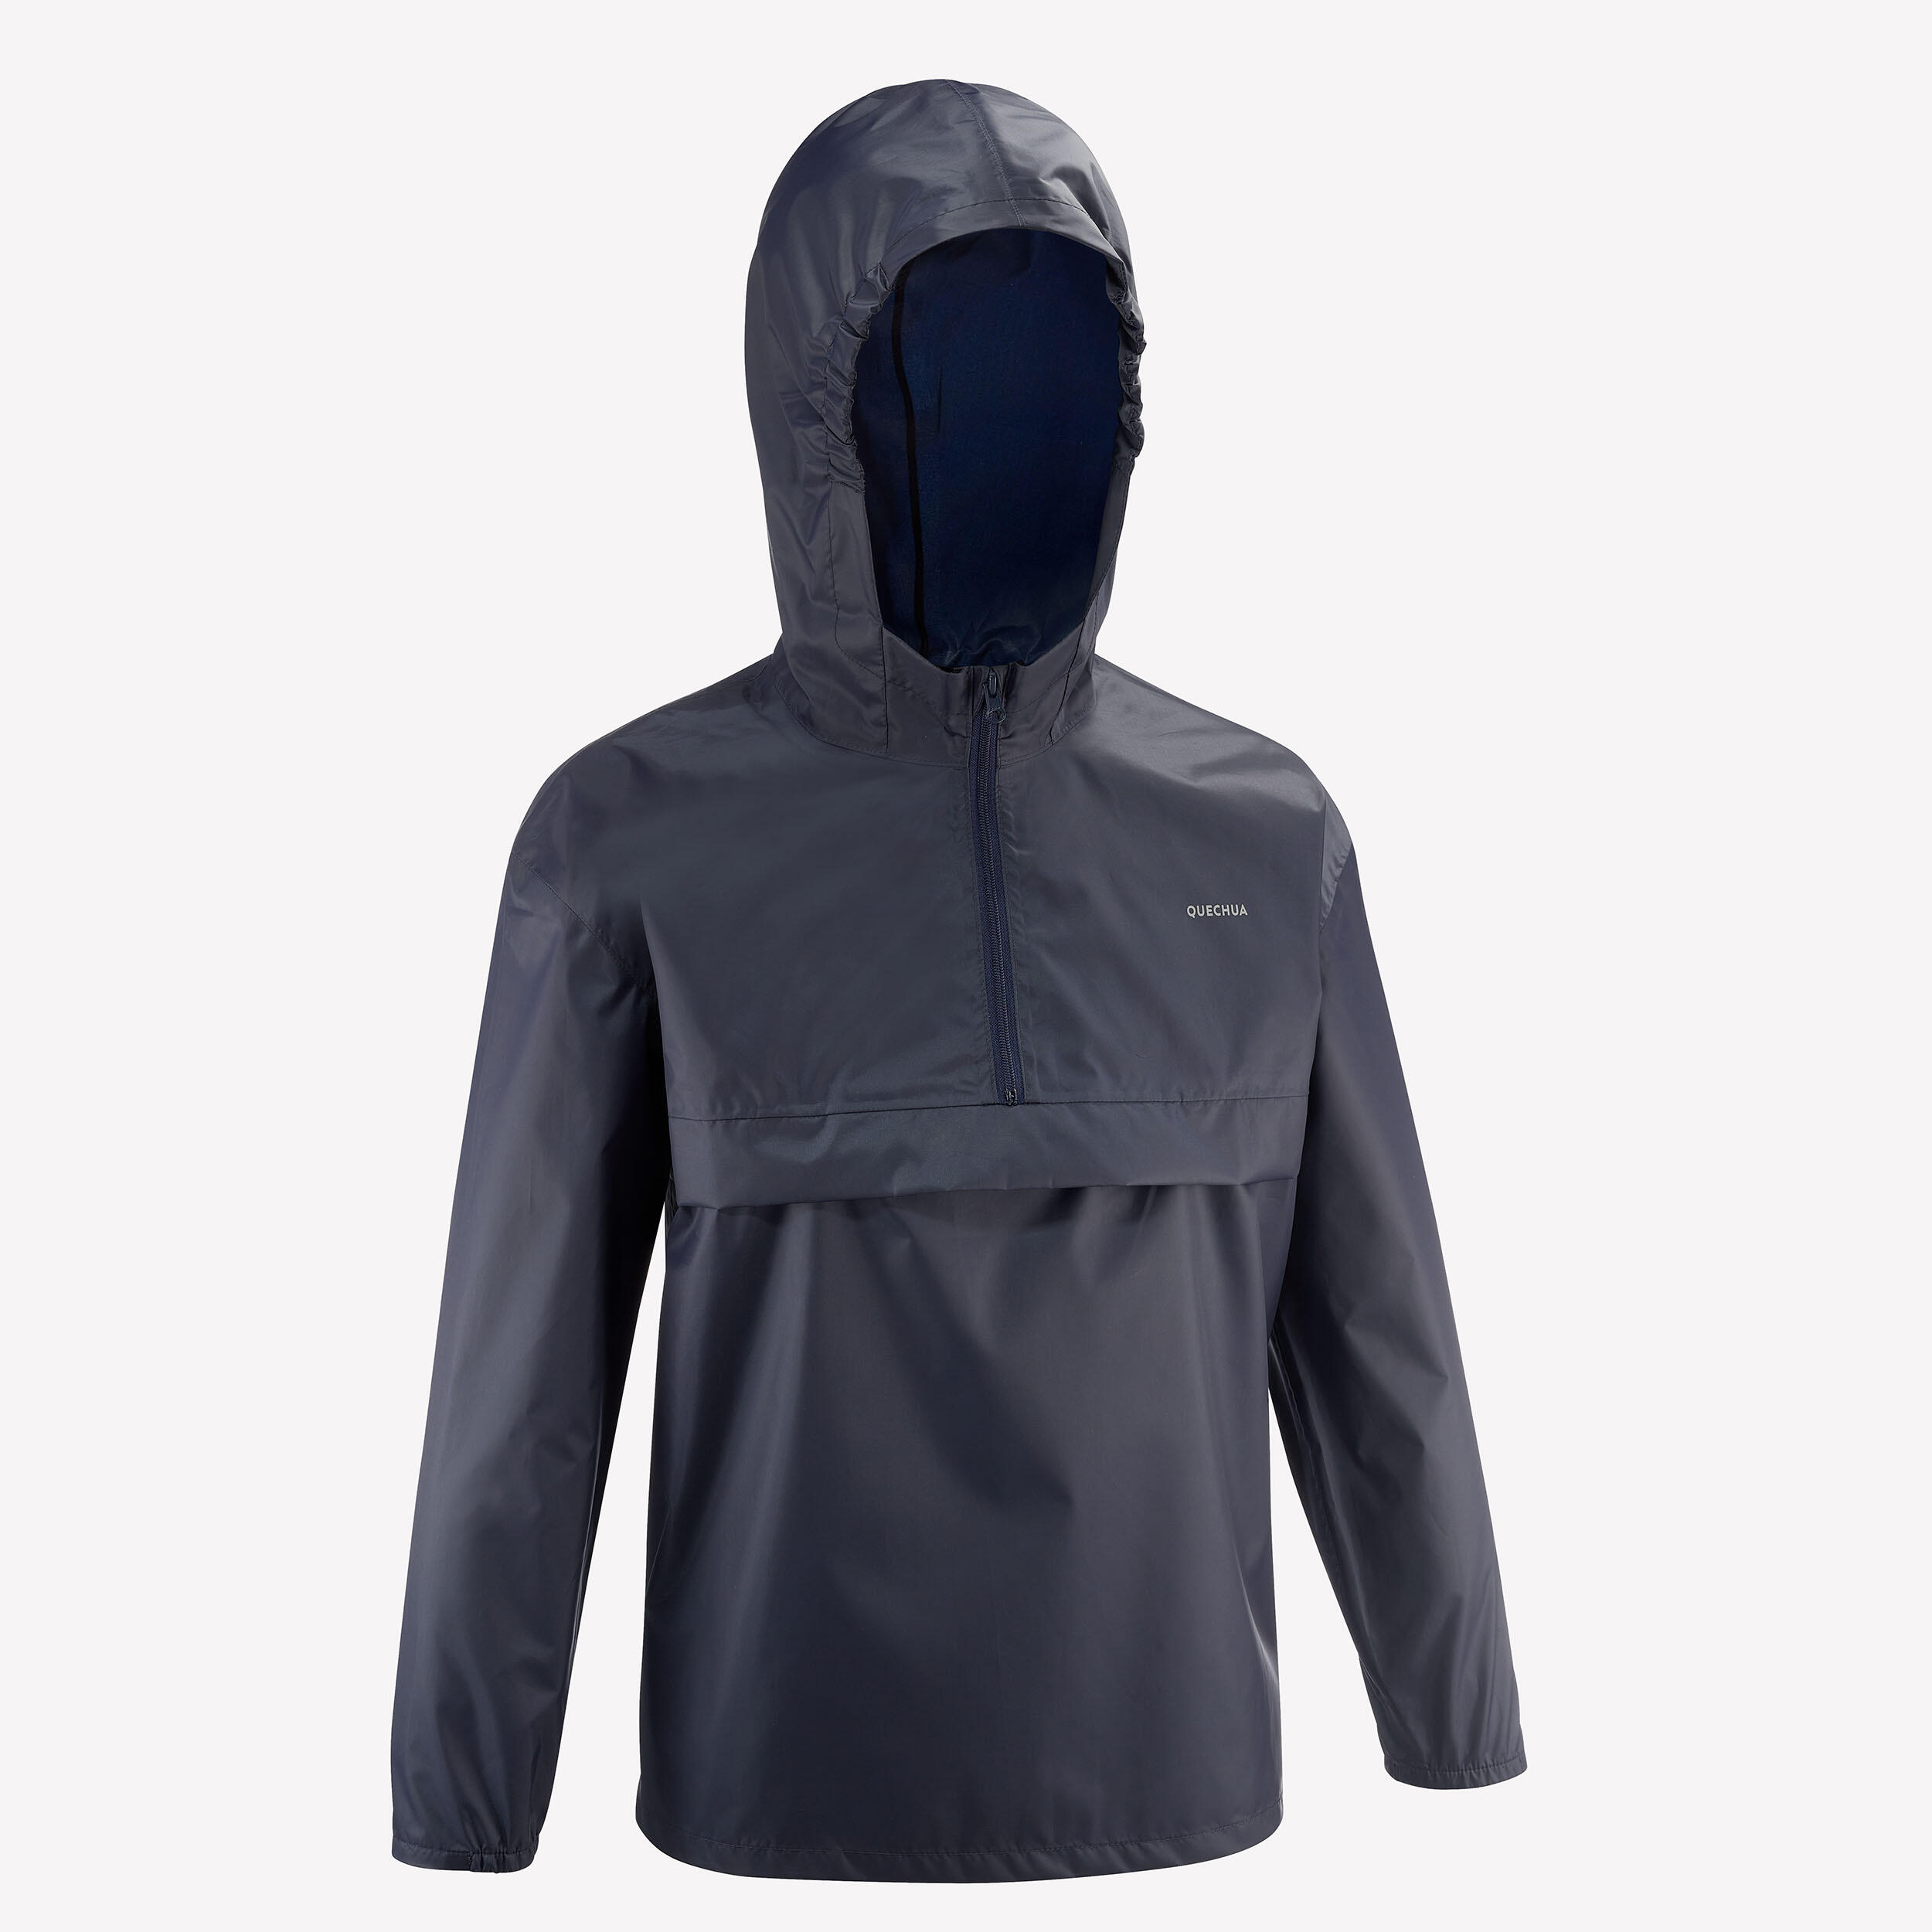 Buy Men'S Tennis Jacket Tja 500 - Black/Grey Online | Decathlon